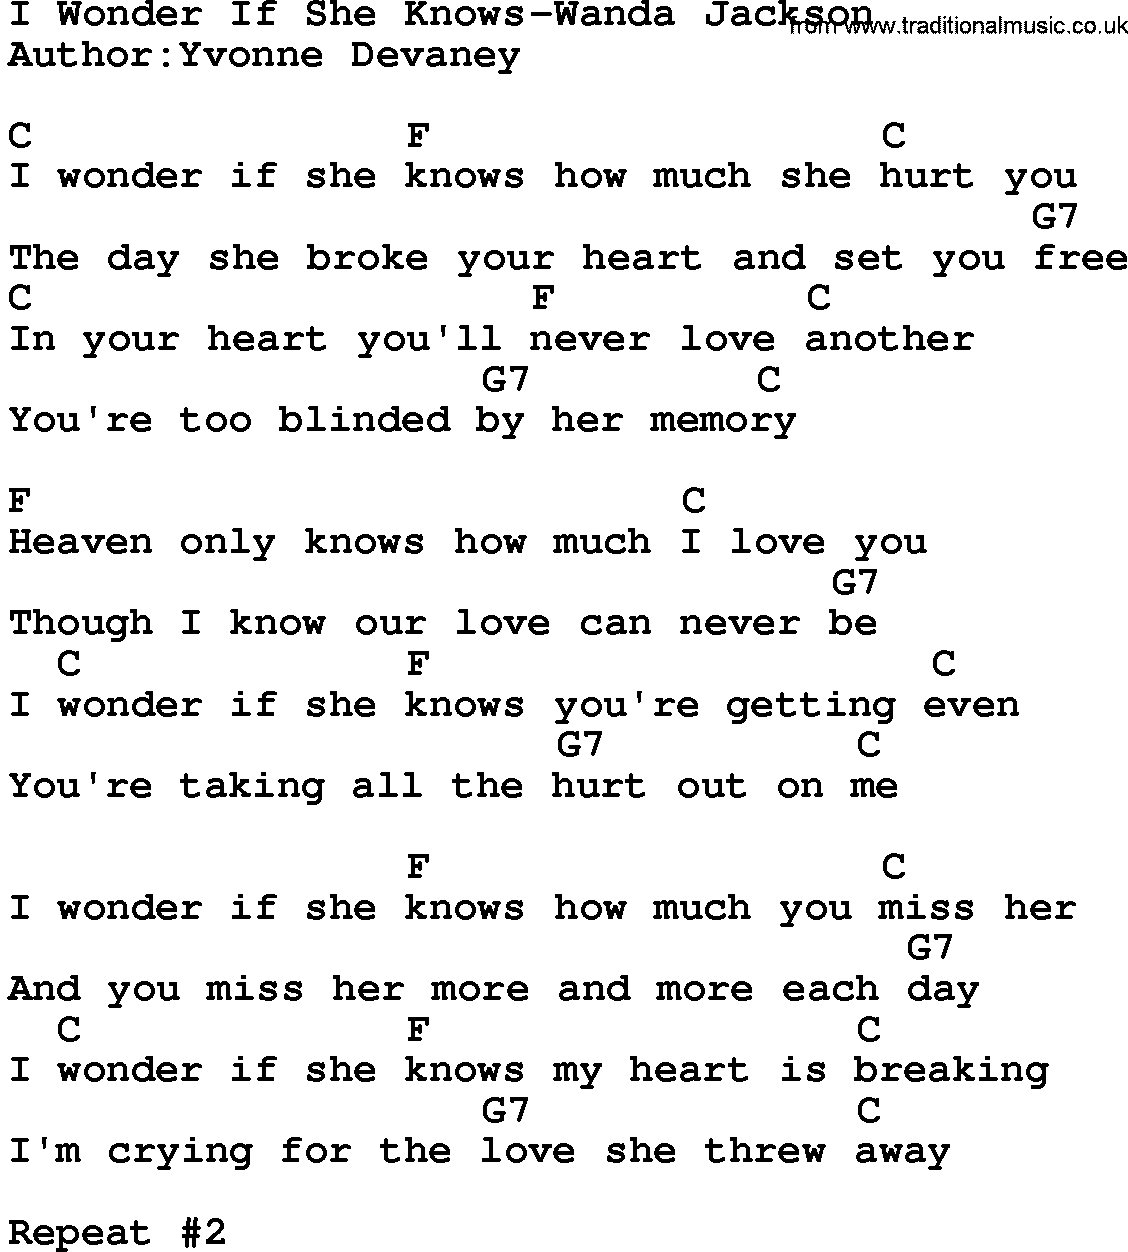 Country music song: I Wonder If She Knows-Wanda Jackson lyrics and chords